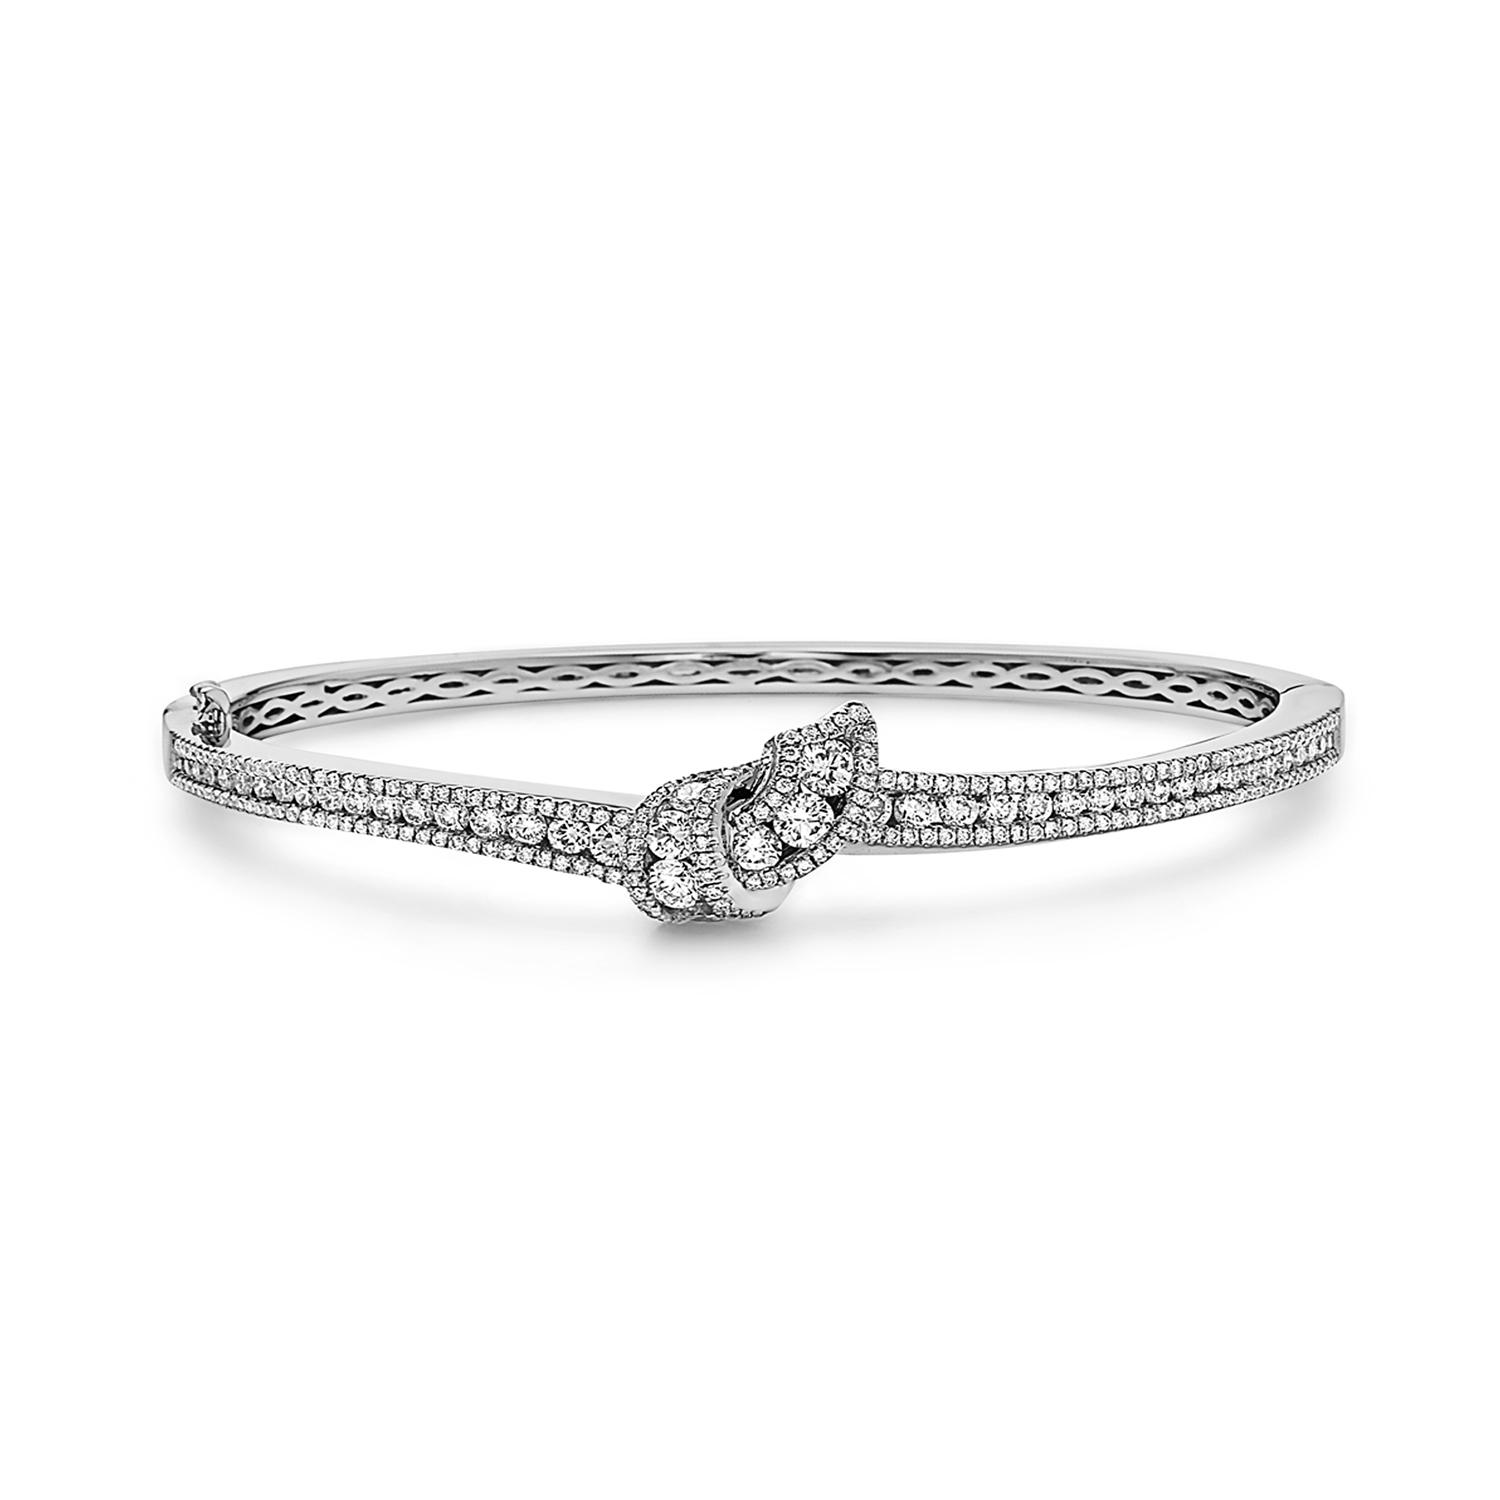 Krypell Collection Diamond Embrace Bracelet